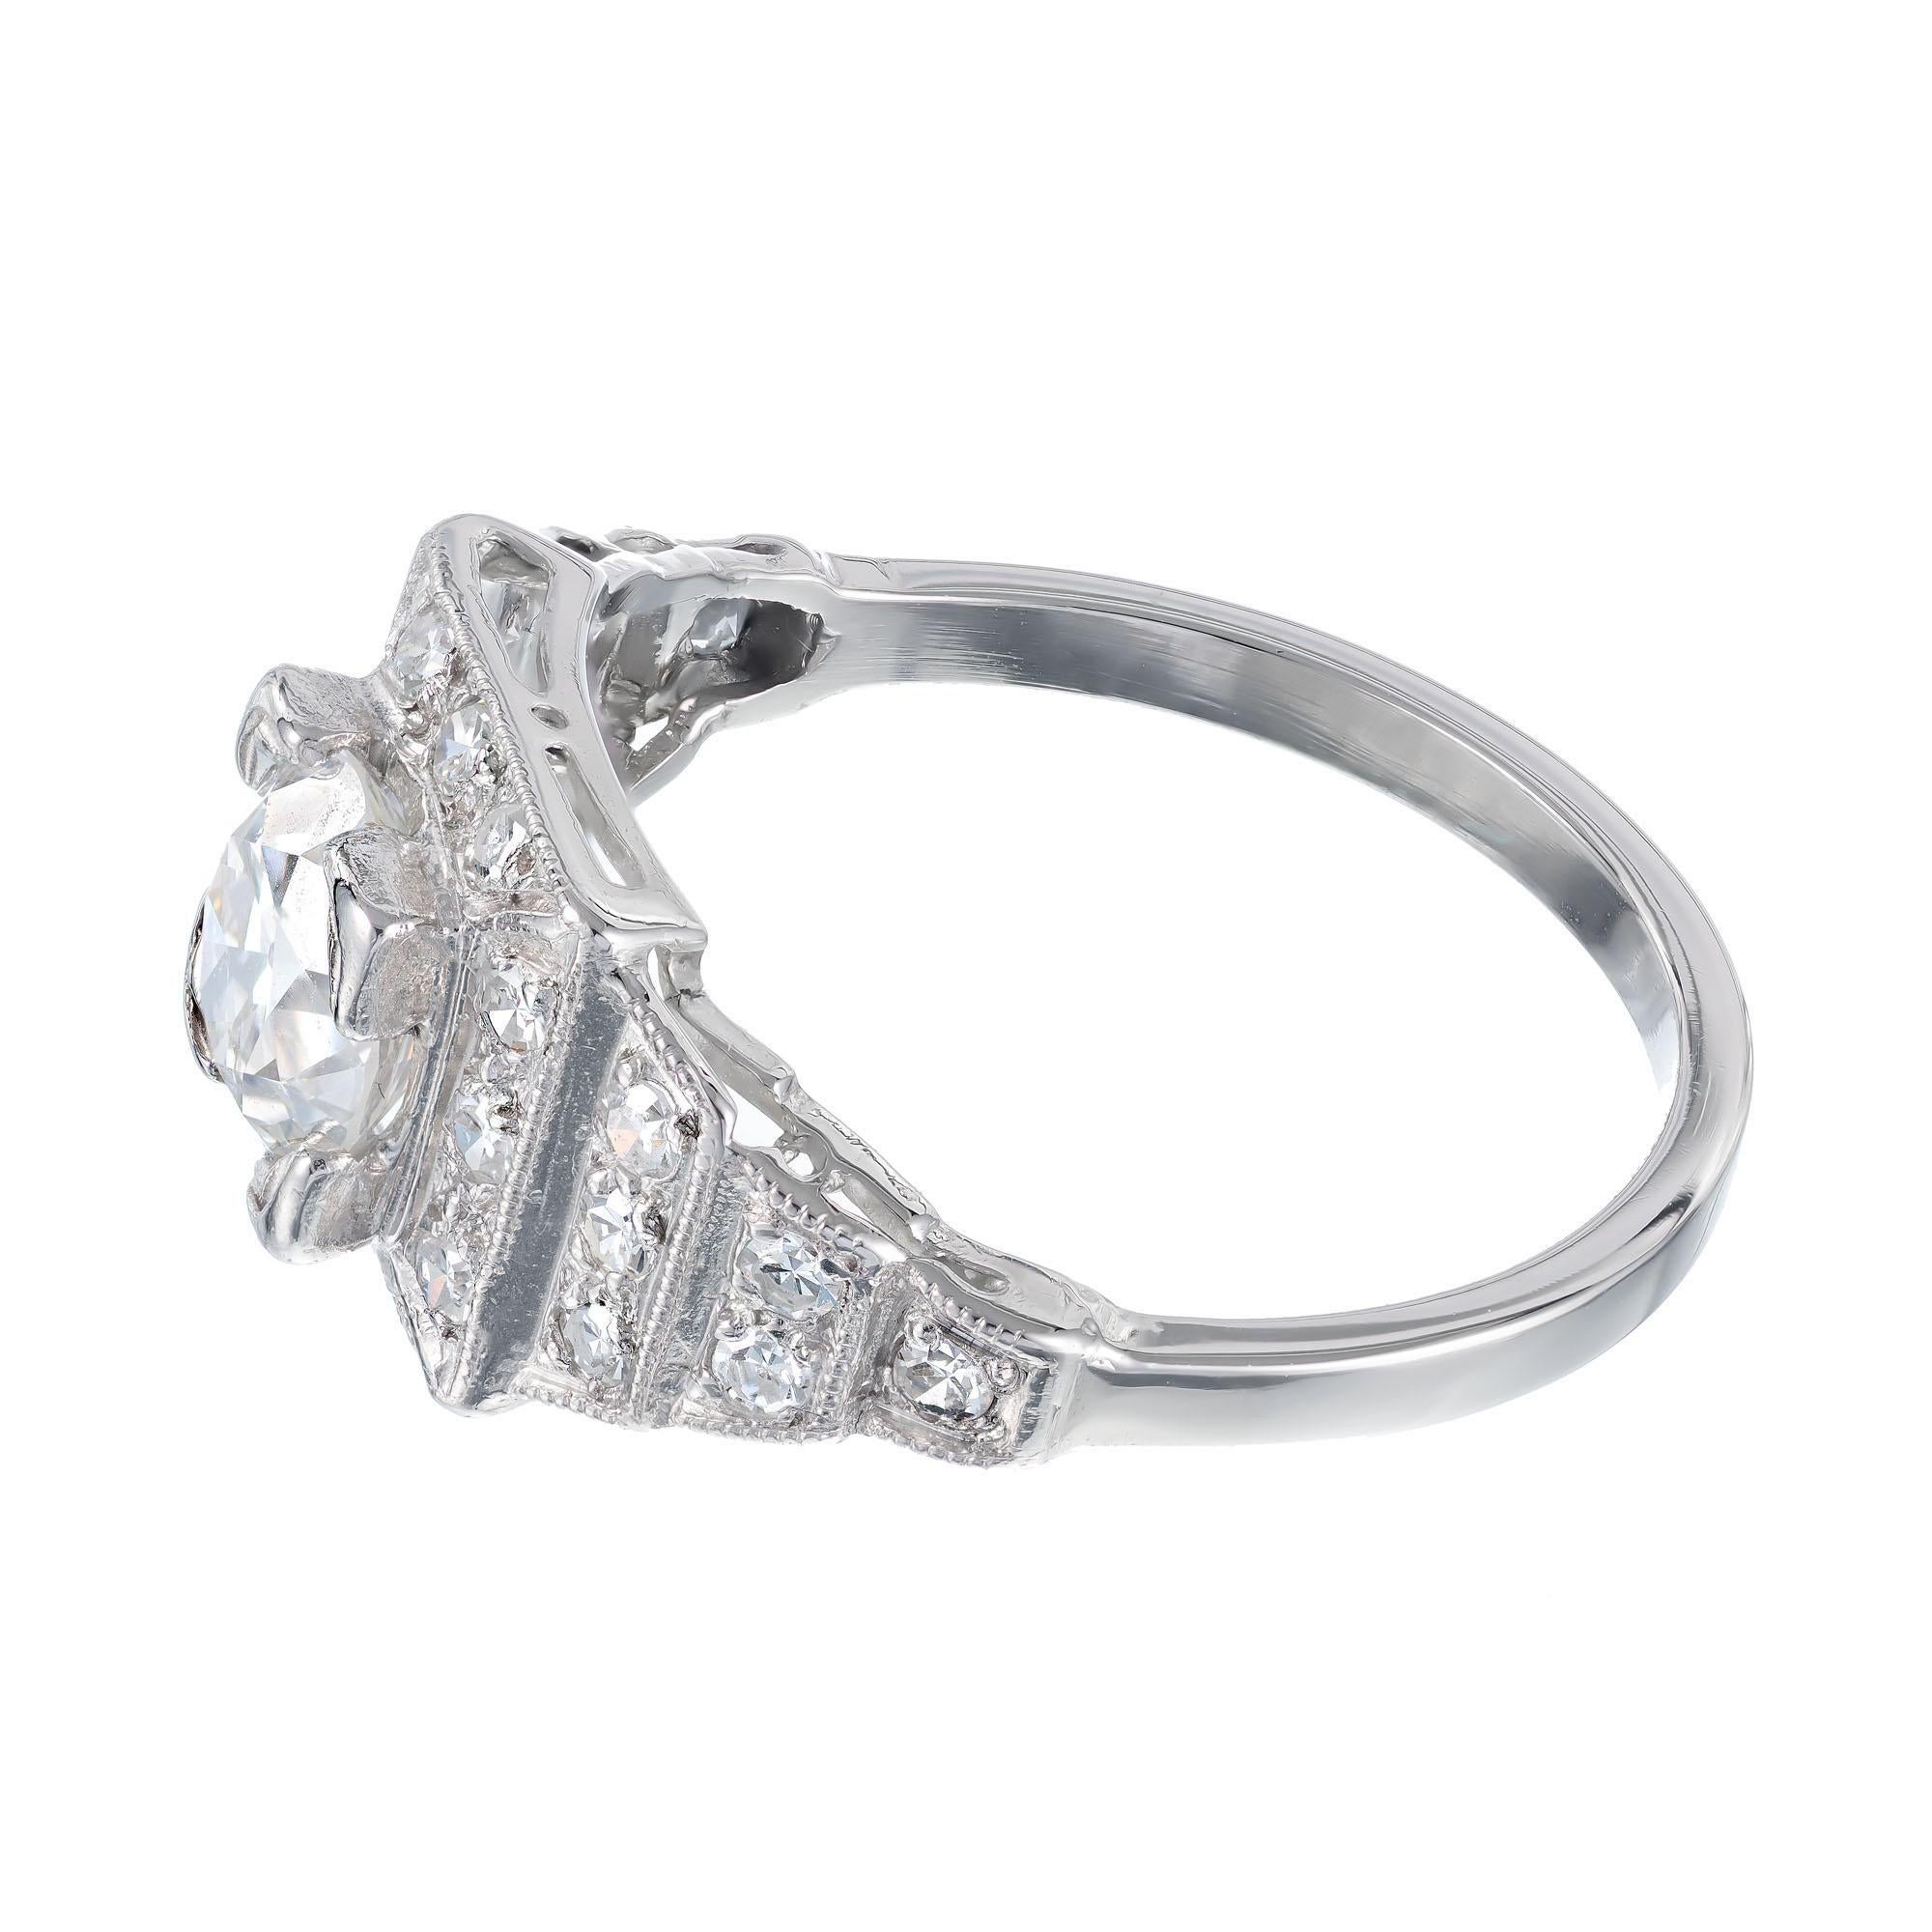 1.11 carat diamond ring